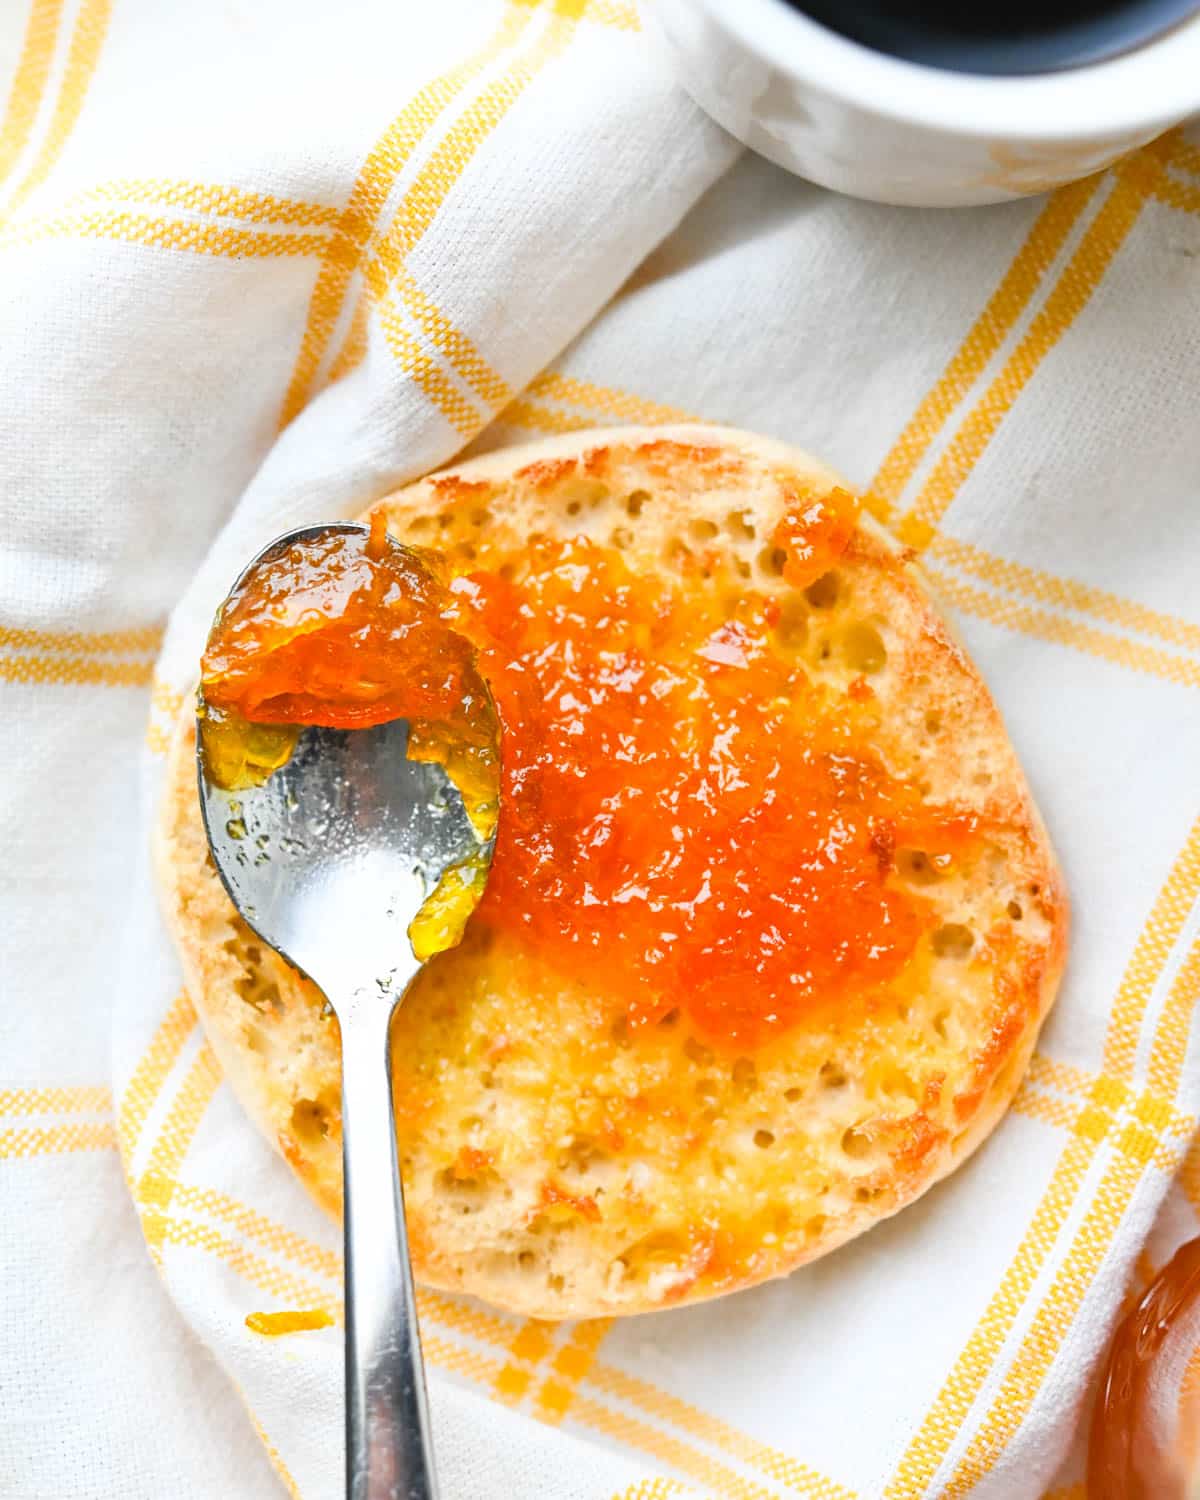 Spreading calamansi lime marmalade on an English Muffin.